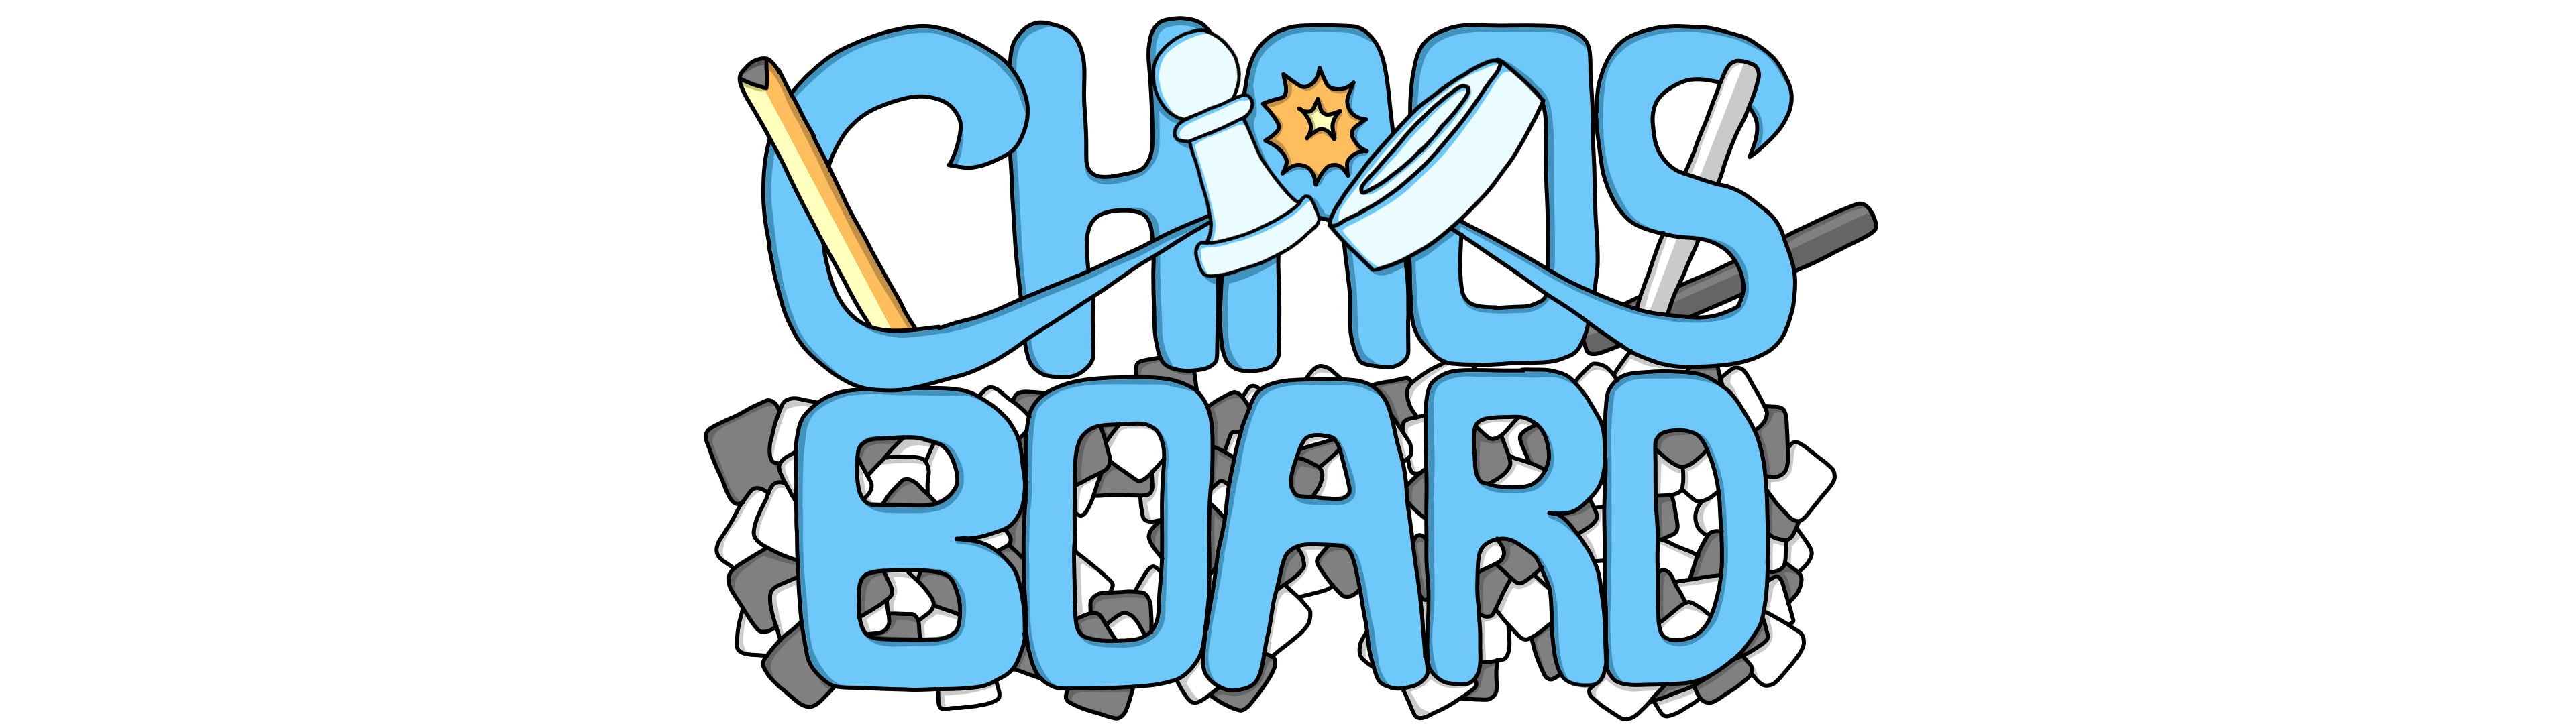 Chaos Board